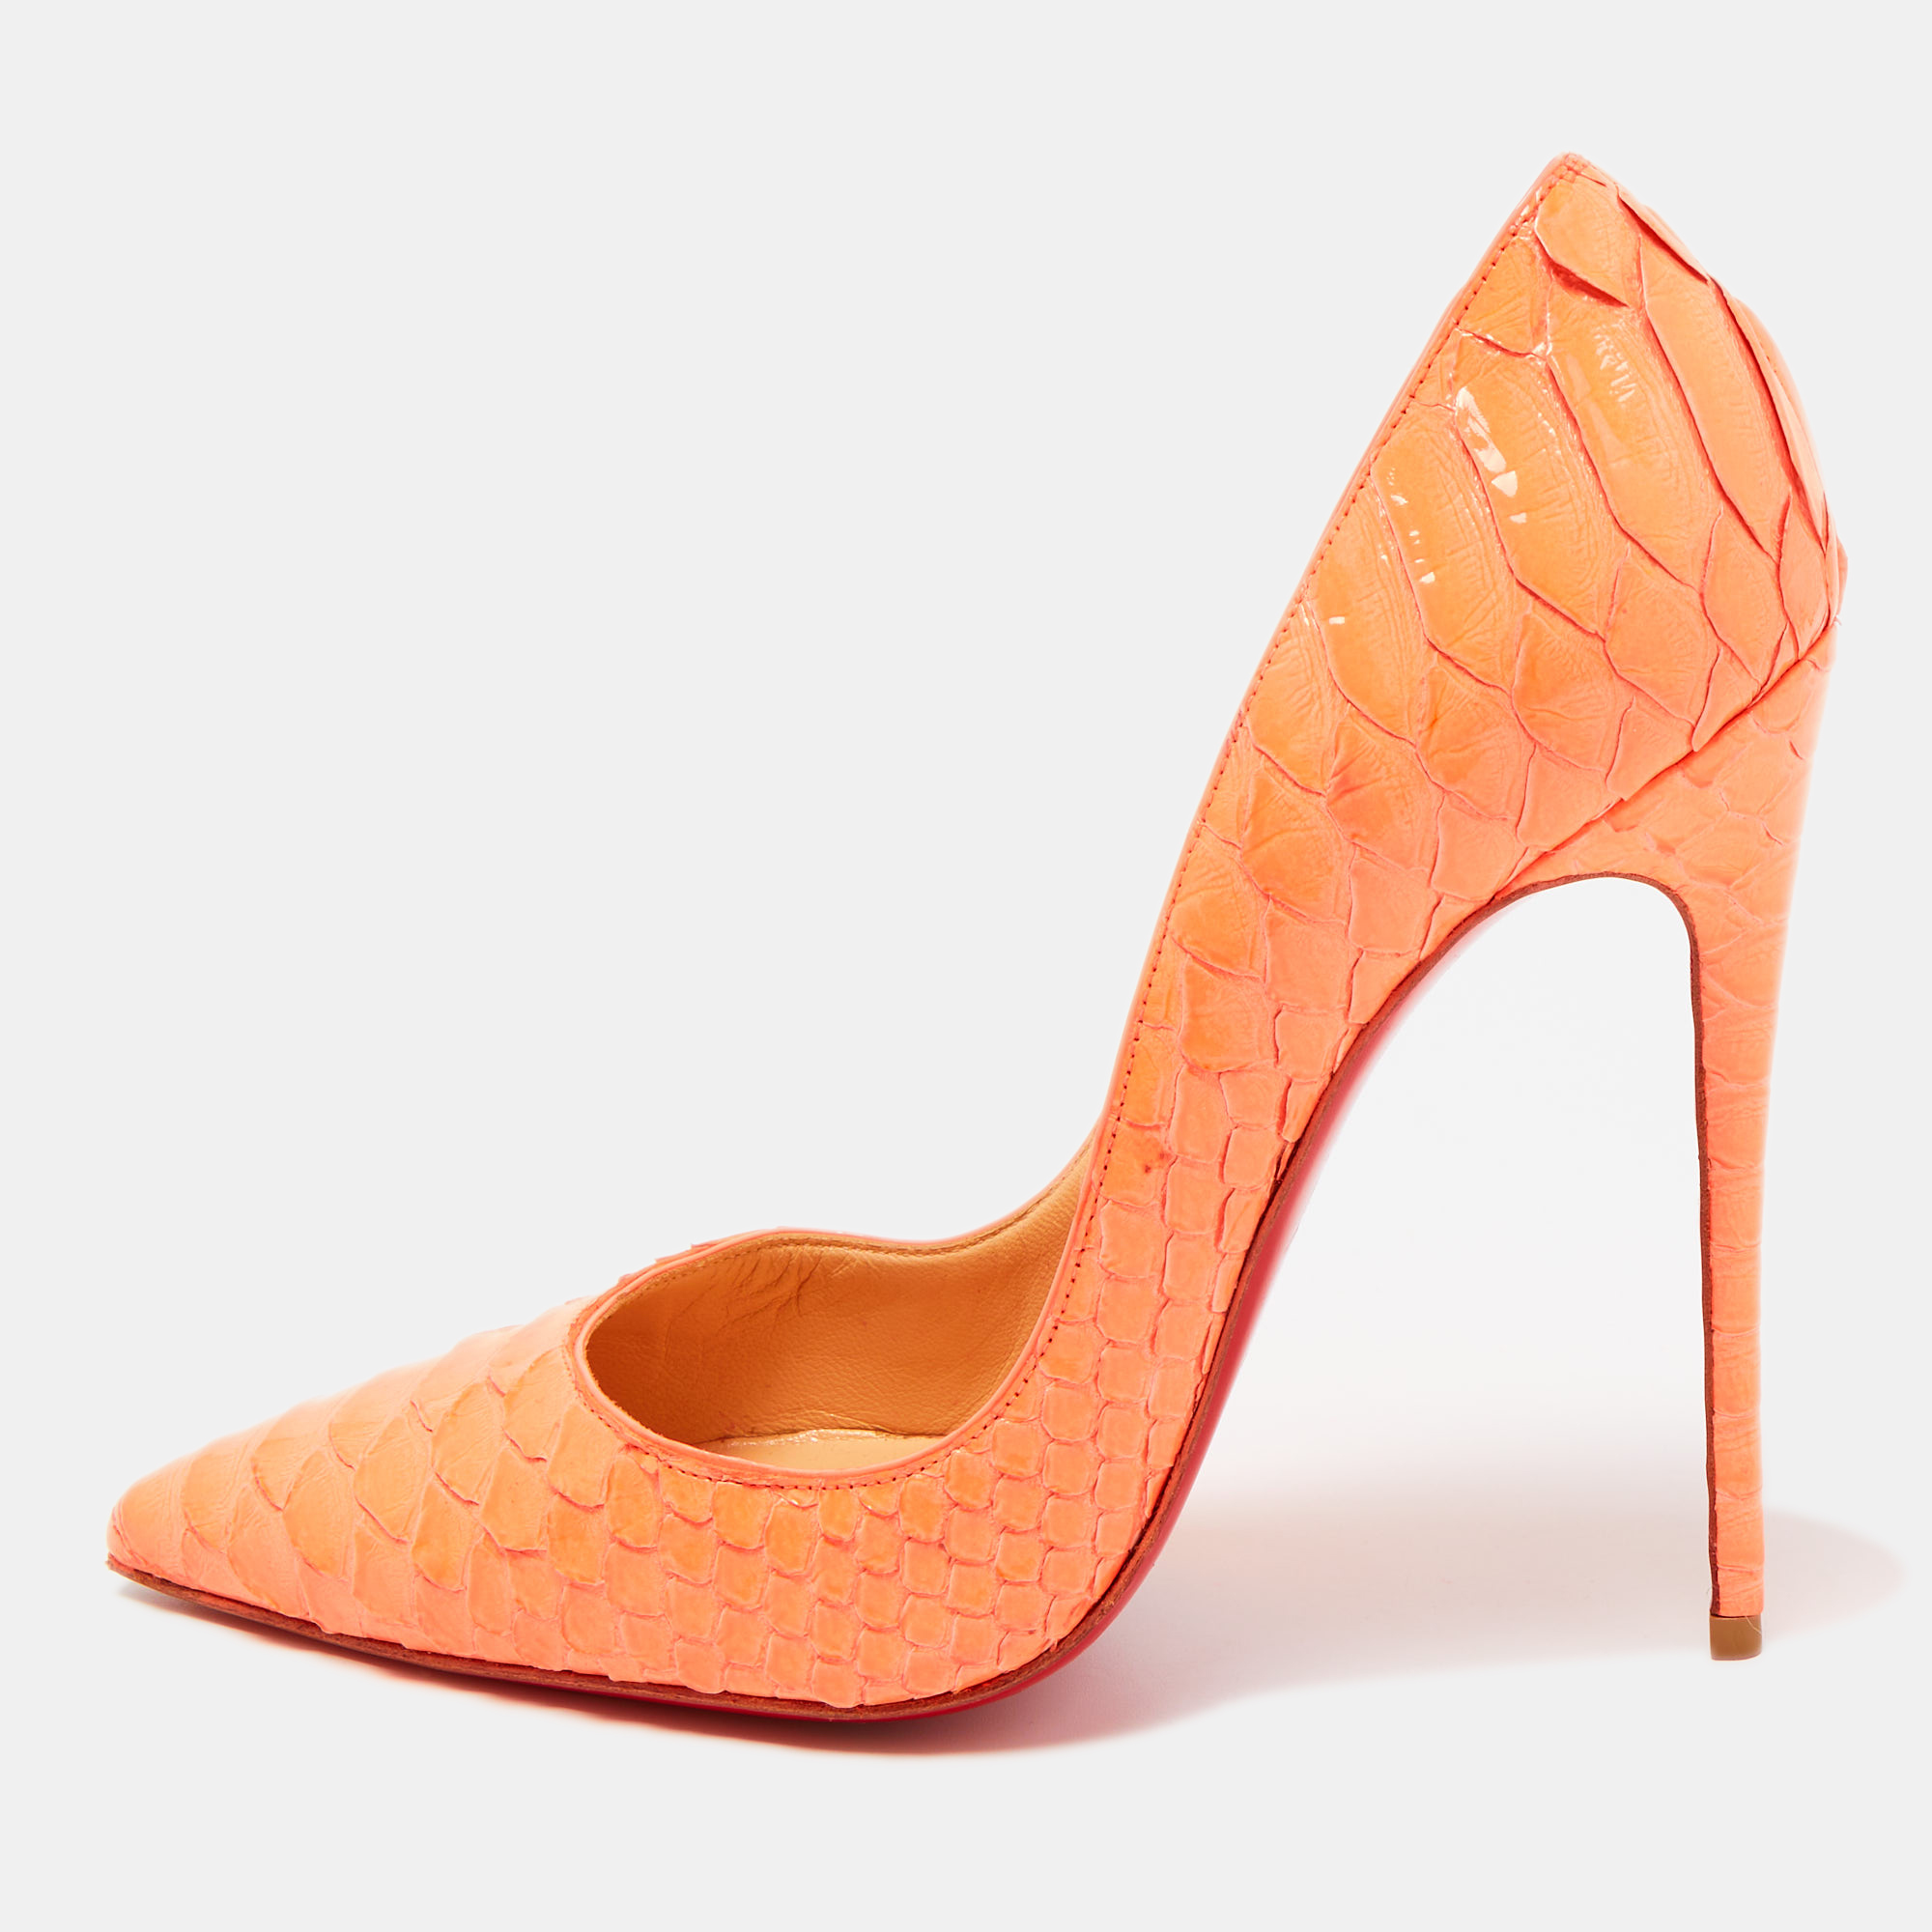 Pre-owned Christian Louboutin Neon Orange Python So Kate Pumps Size 39